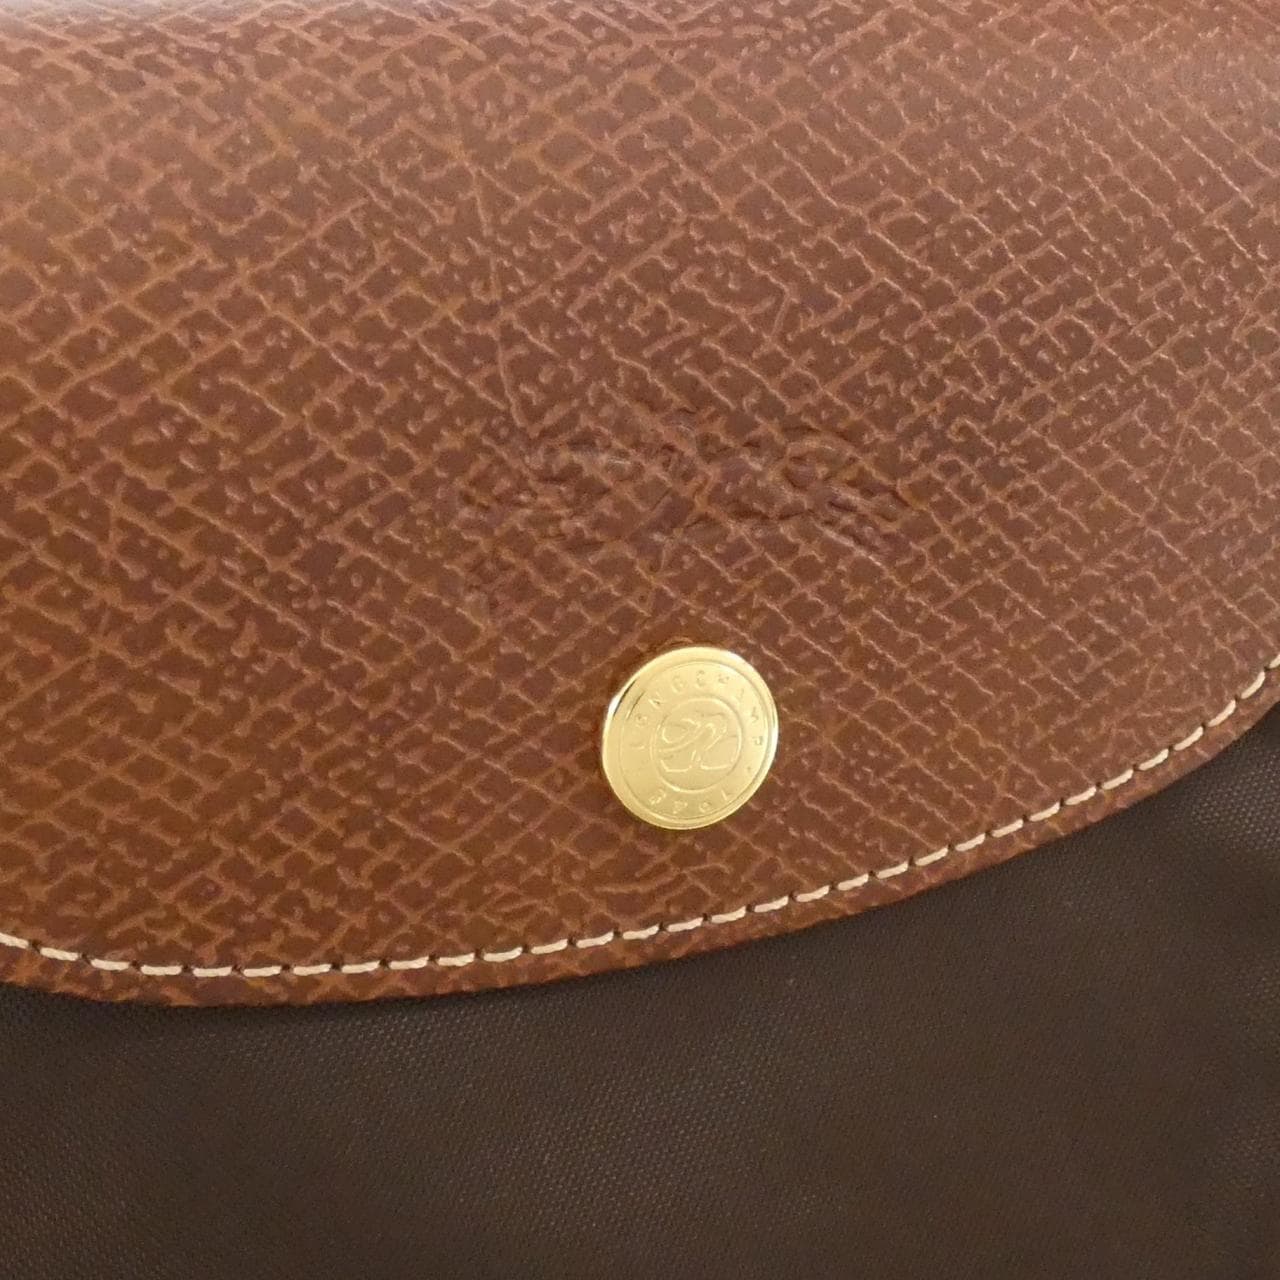 [BRAND NEW] Longchamp Le Pliage 1621 089 Bag